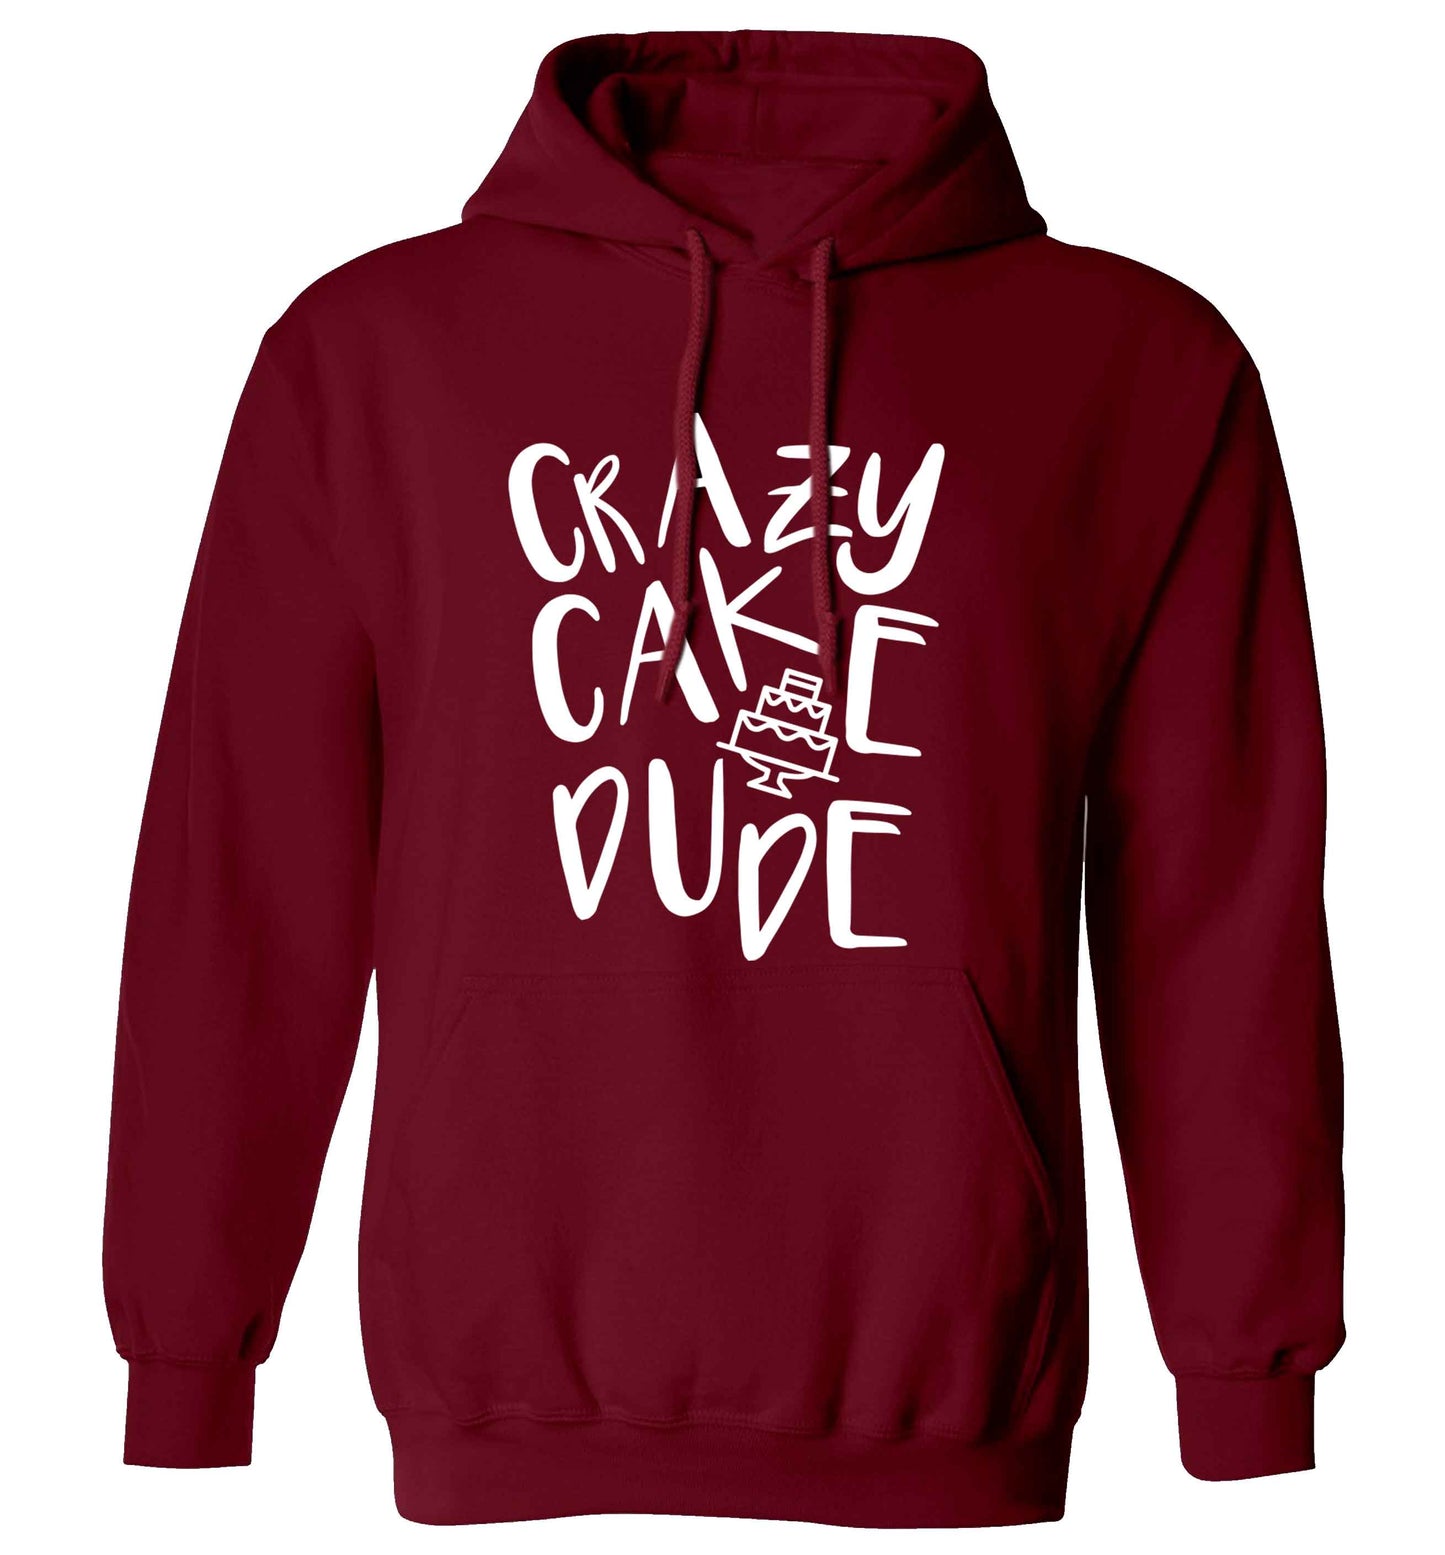 Crazy cake dude adults unisex maroon hoodie 2XL